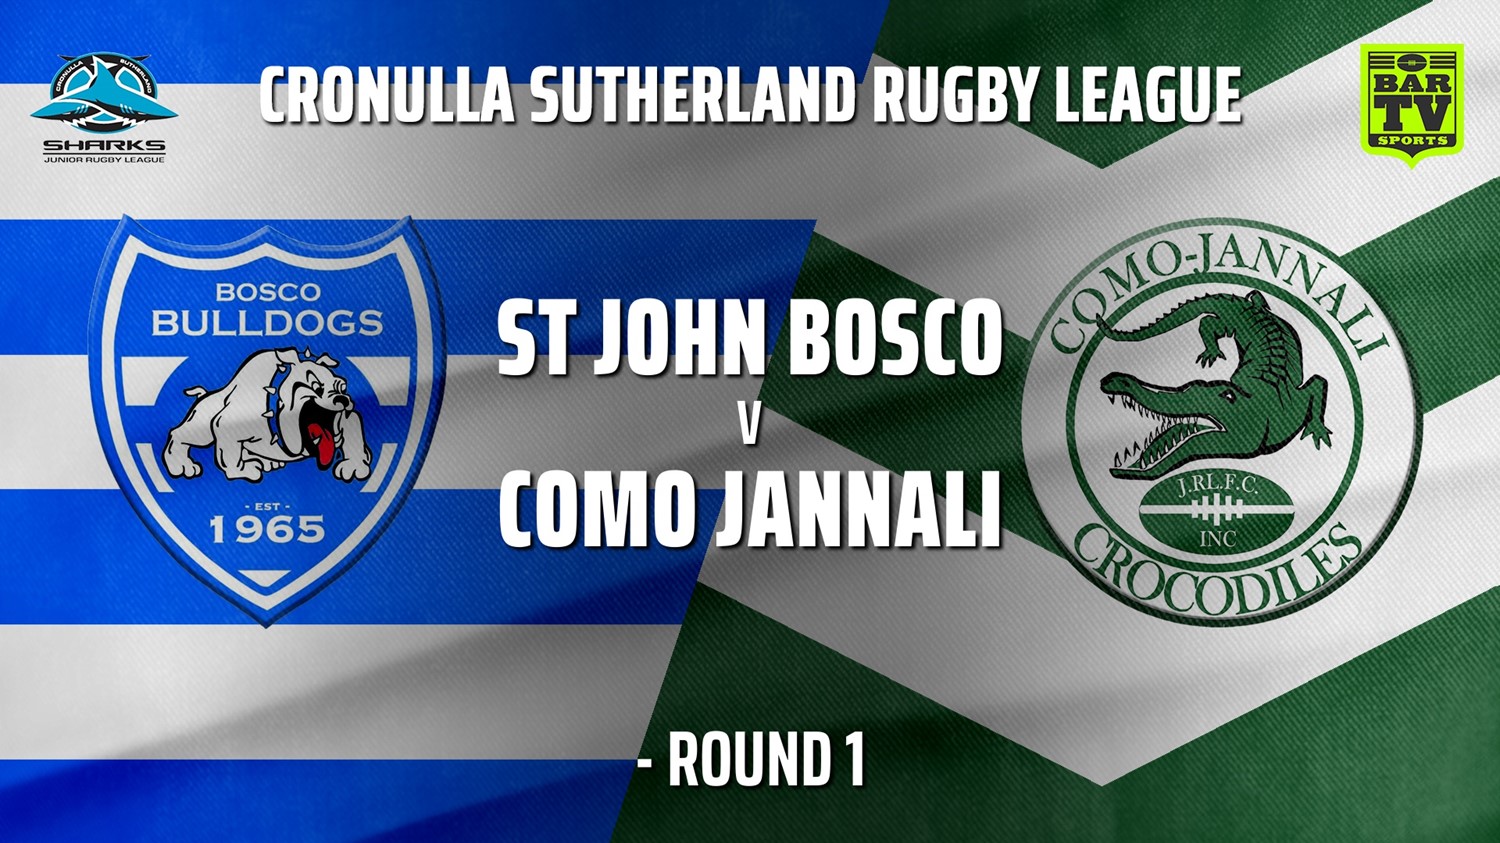 210501-Cronulla JRL Southern Under 13s SILVER Round 1 - St John Bosco Bulldogs v Como Jannali Crocodiles (2) Minigame Slate Image